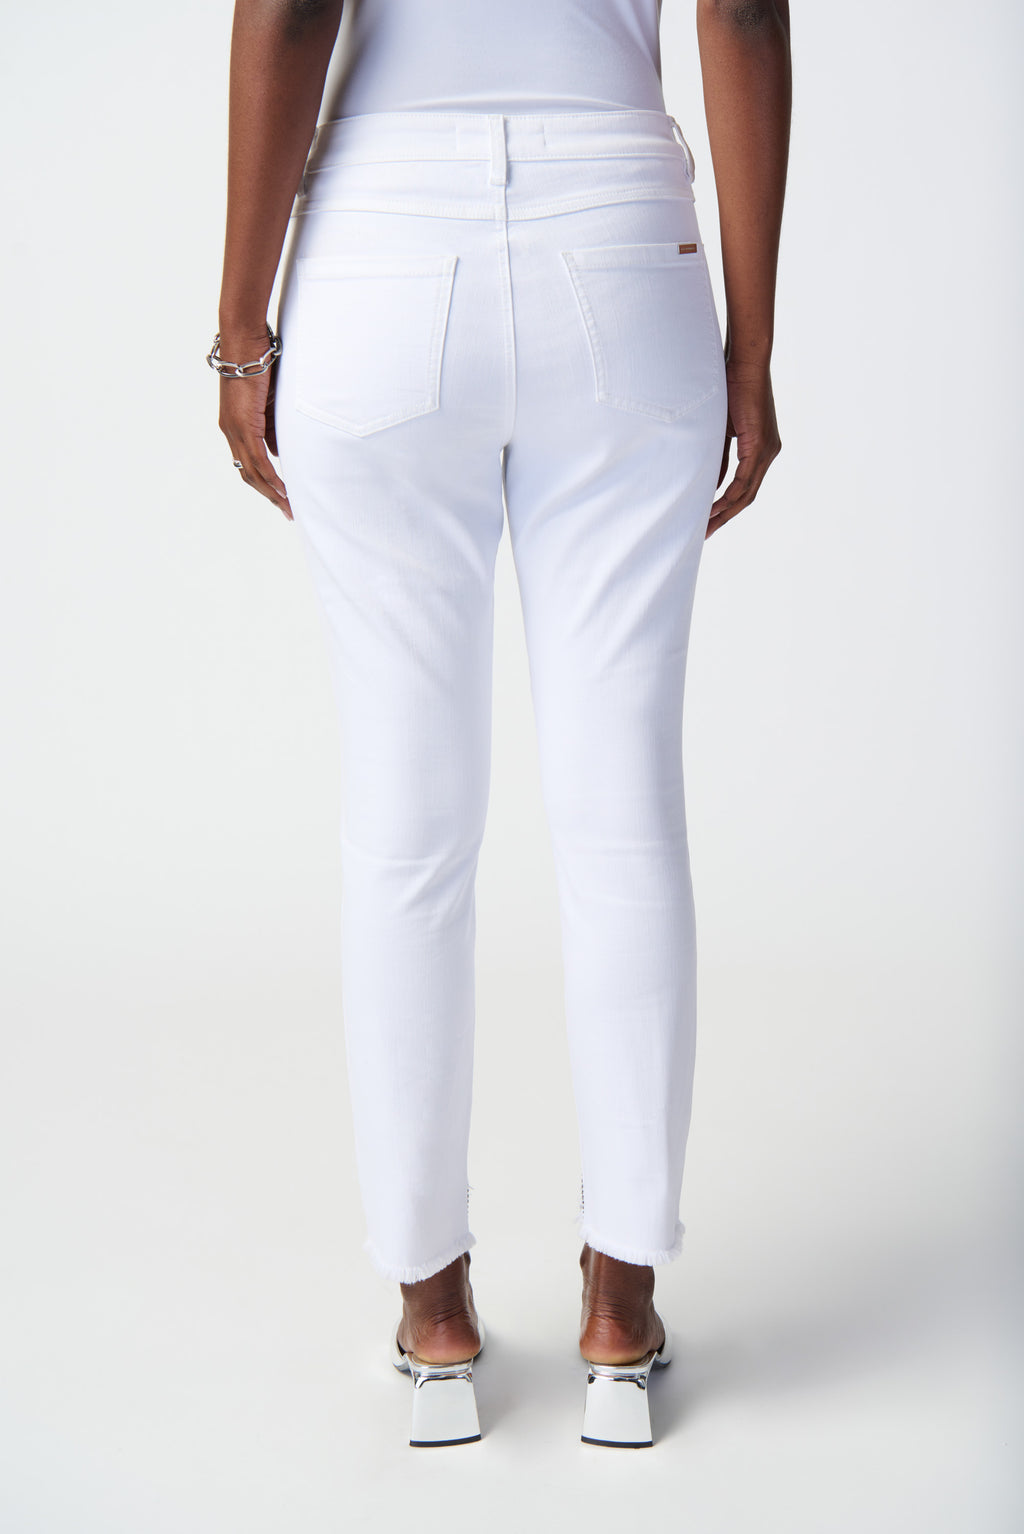 Joseph Ribkoff White Cropped Jeans with Frayed Hem Style 241921